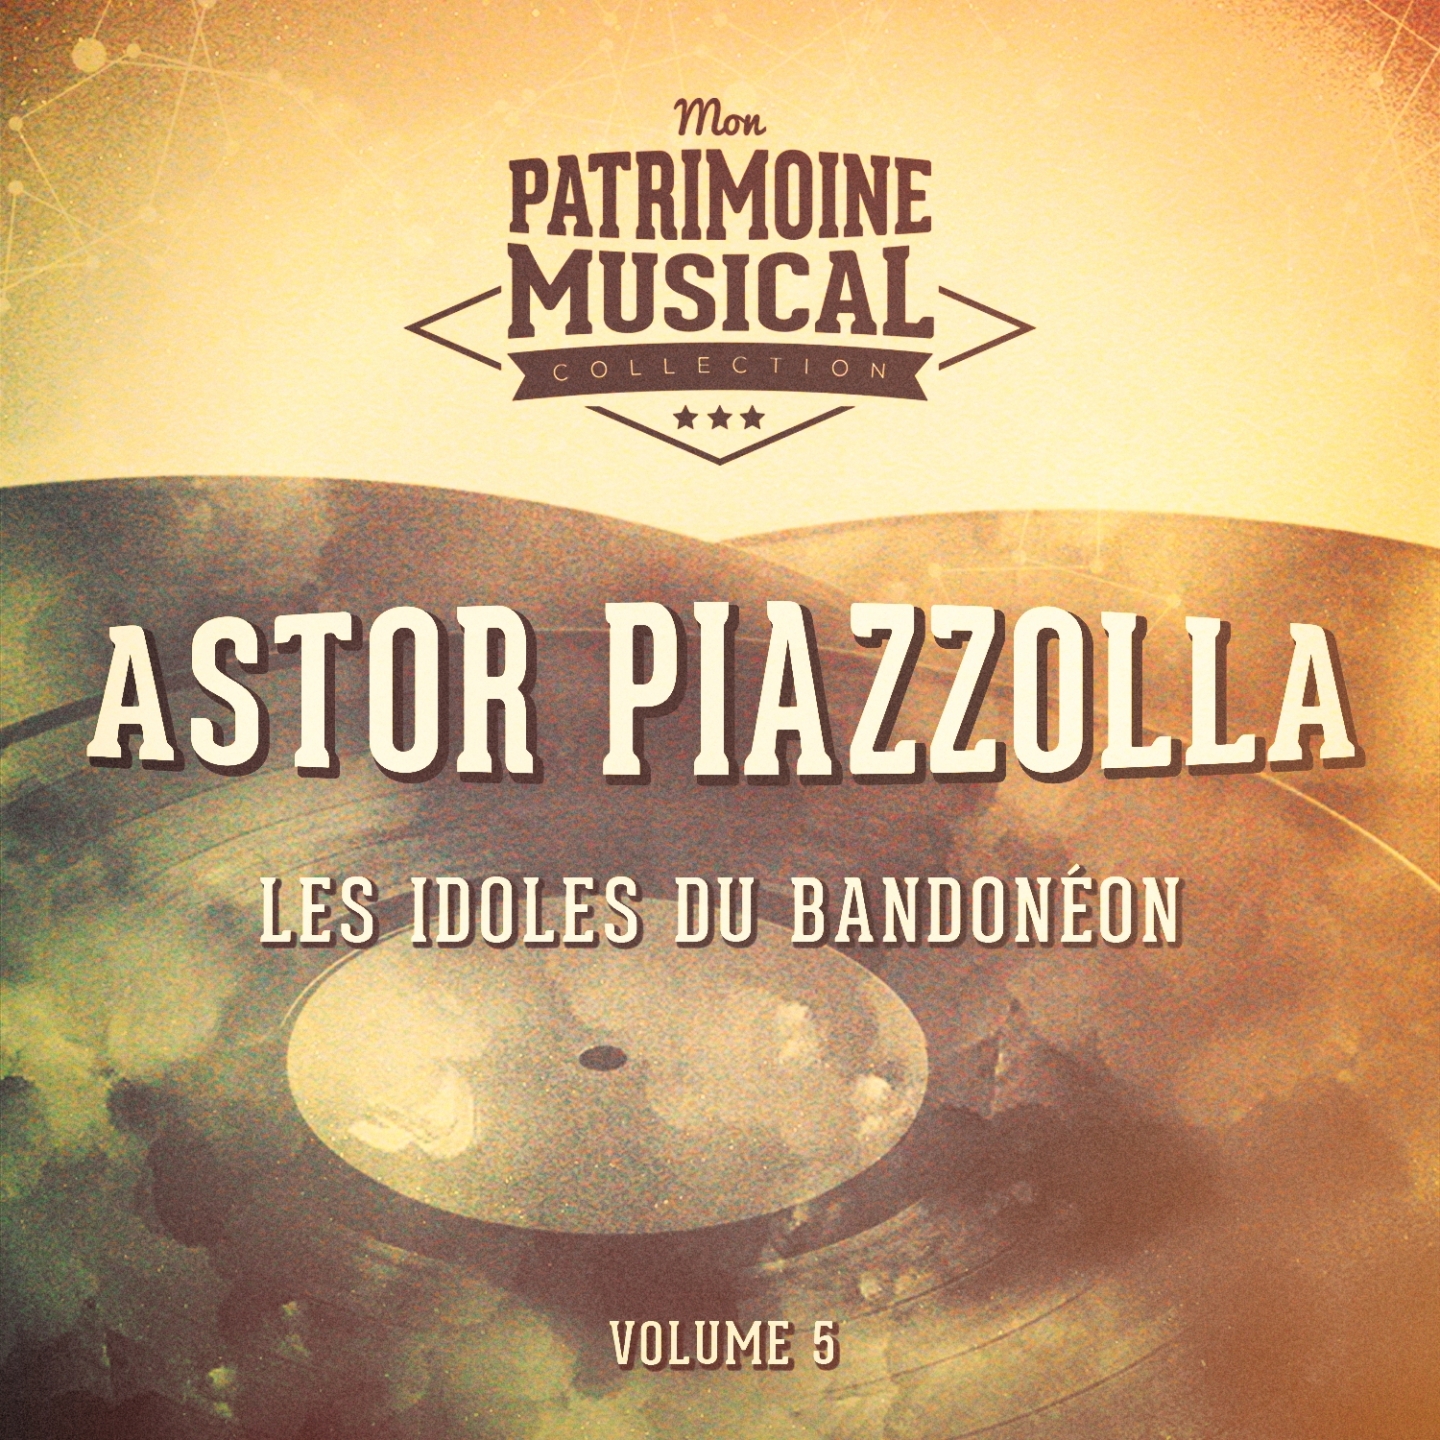 Les idoles du bandone on : Astor Piazzolla, Vol. 5